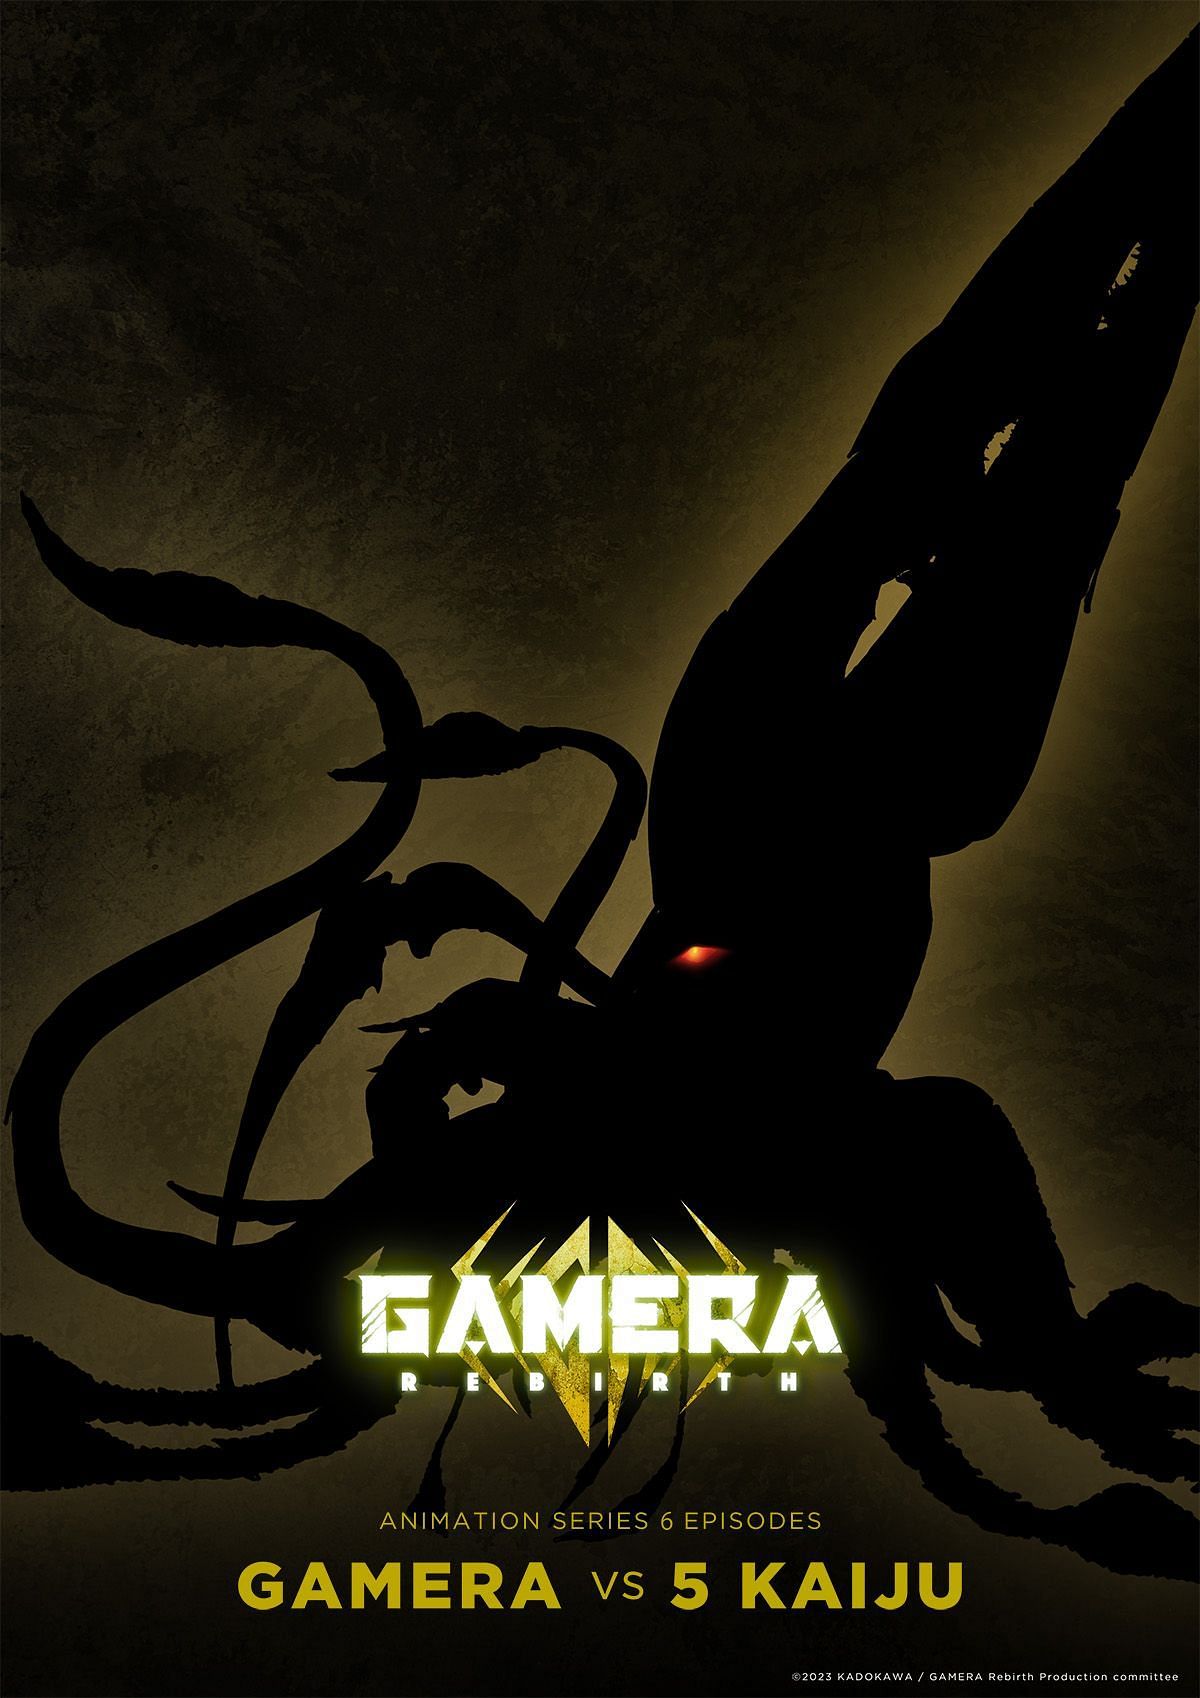 Viras as revealed on the official site of Gamera: Rebirth (Image via Kadokawa/ENGI)